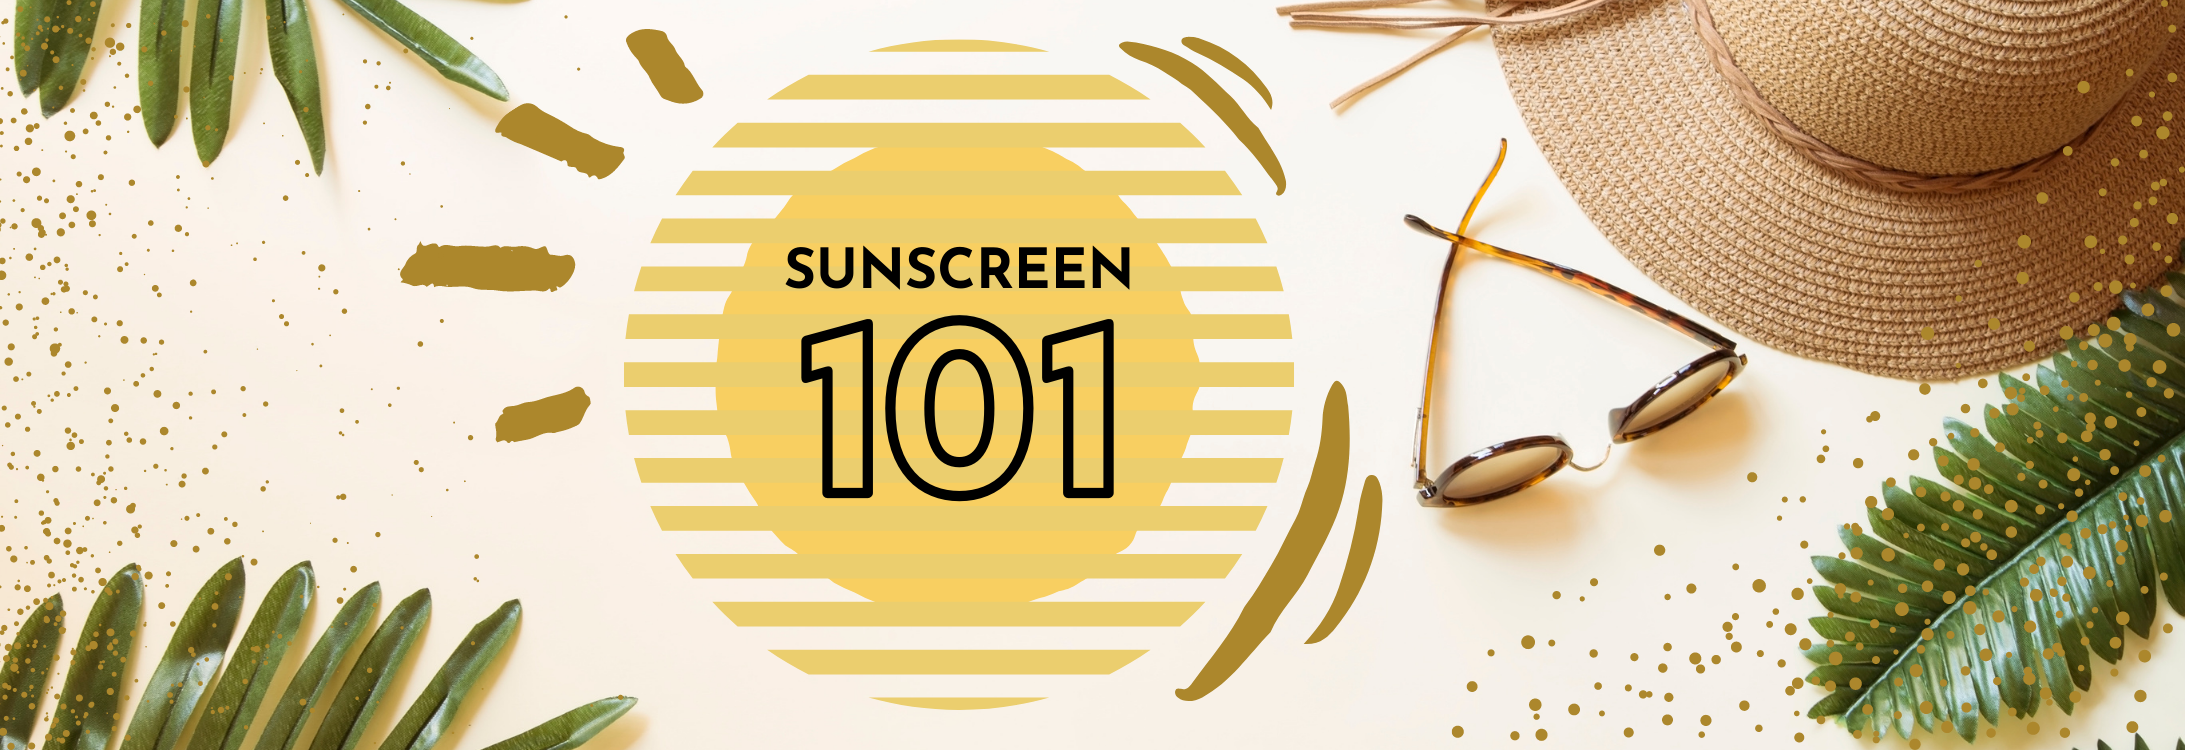 Sunscreen 101 blog cover